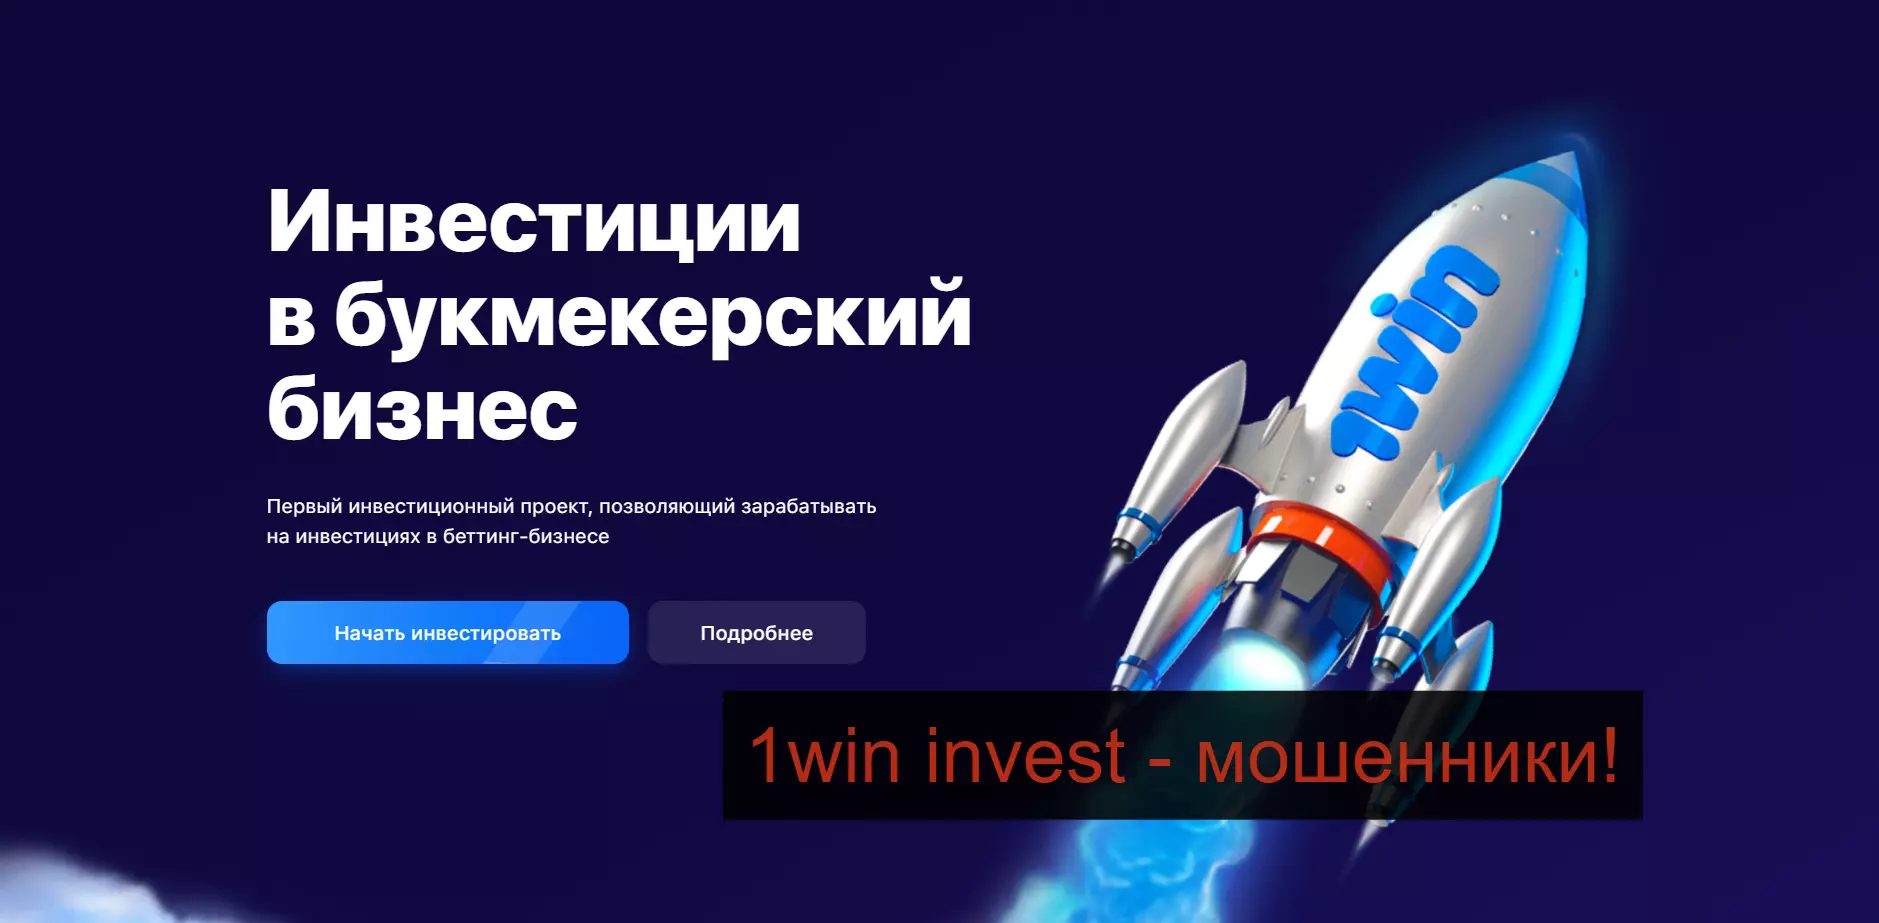 1win invest - 25 отзывов и жалобы о компании